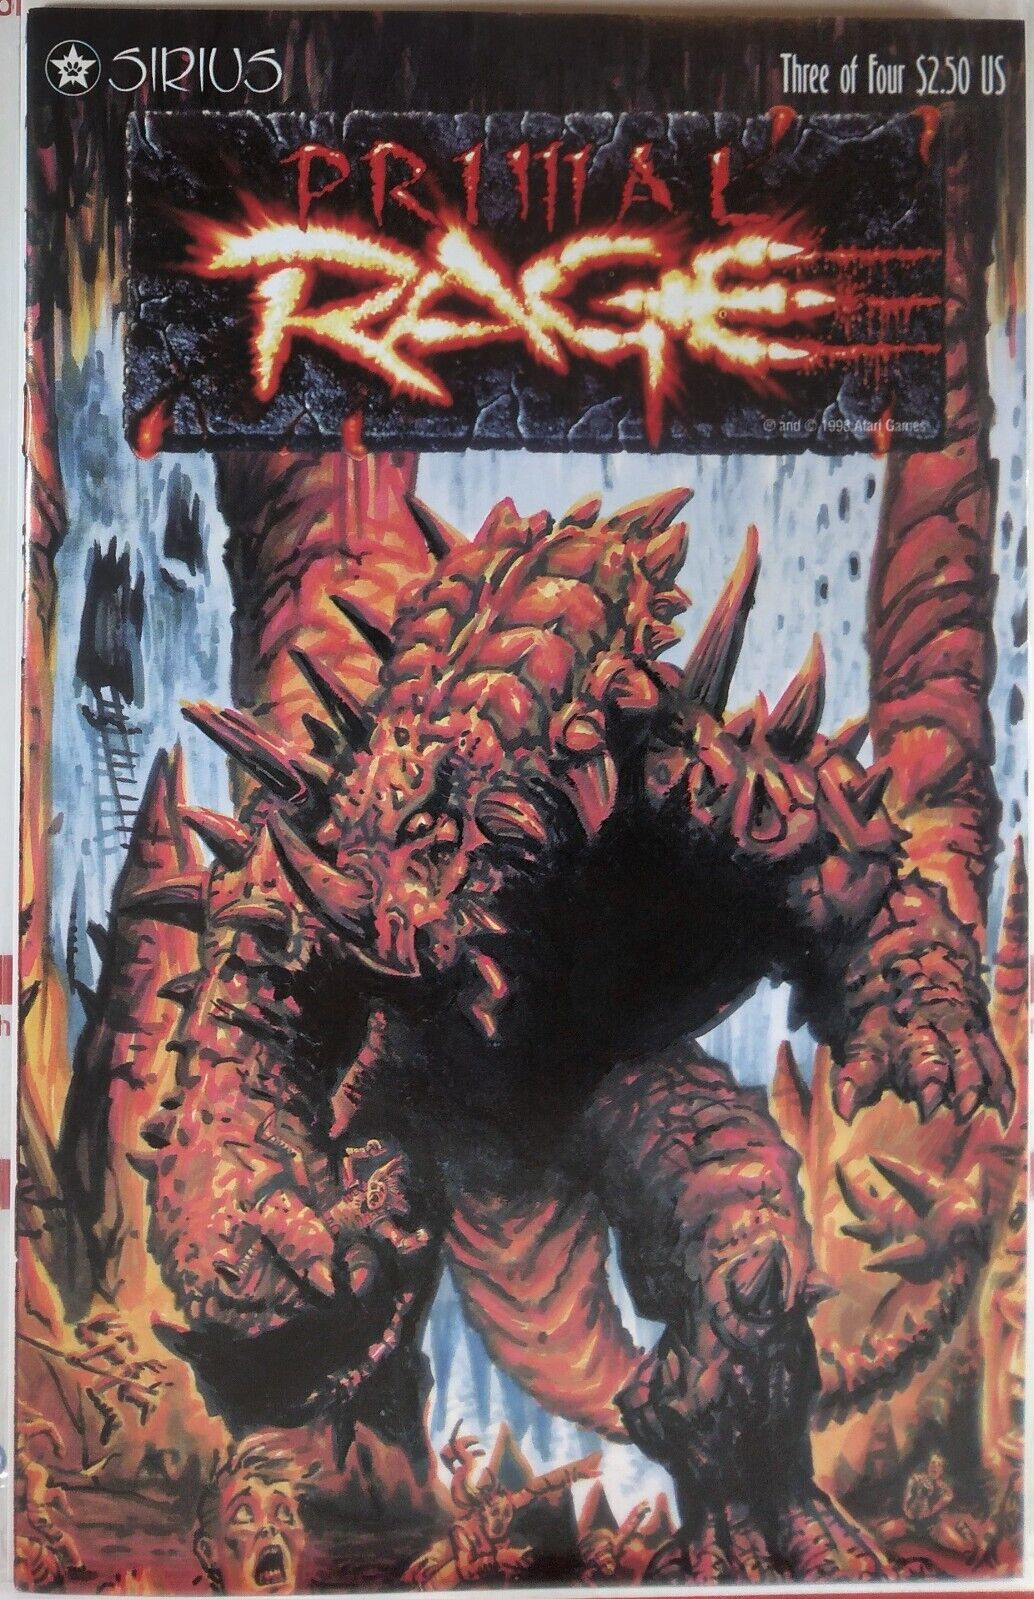 🔥 PRIMAL RAGE #3 NM- Sirius 1996 ATARI video game shin Godzilla Kong Ultraman